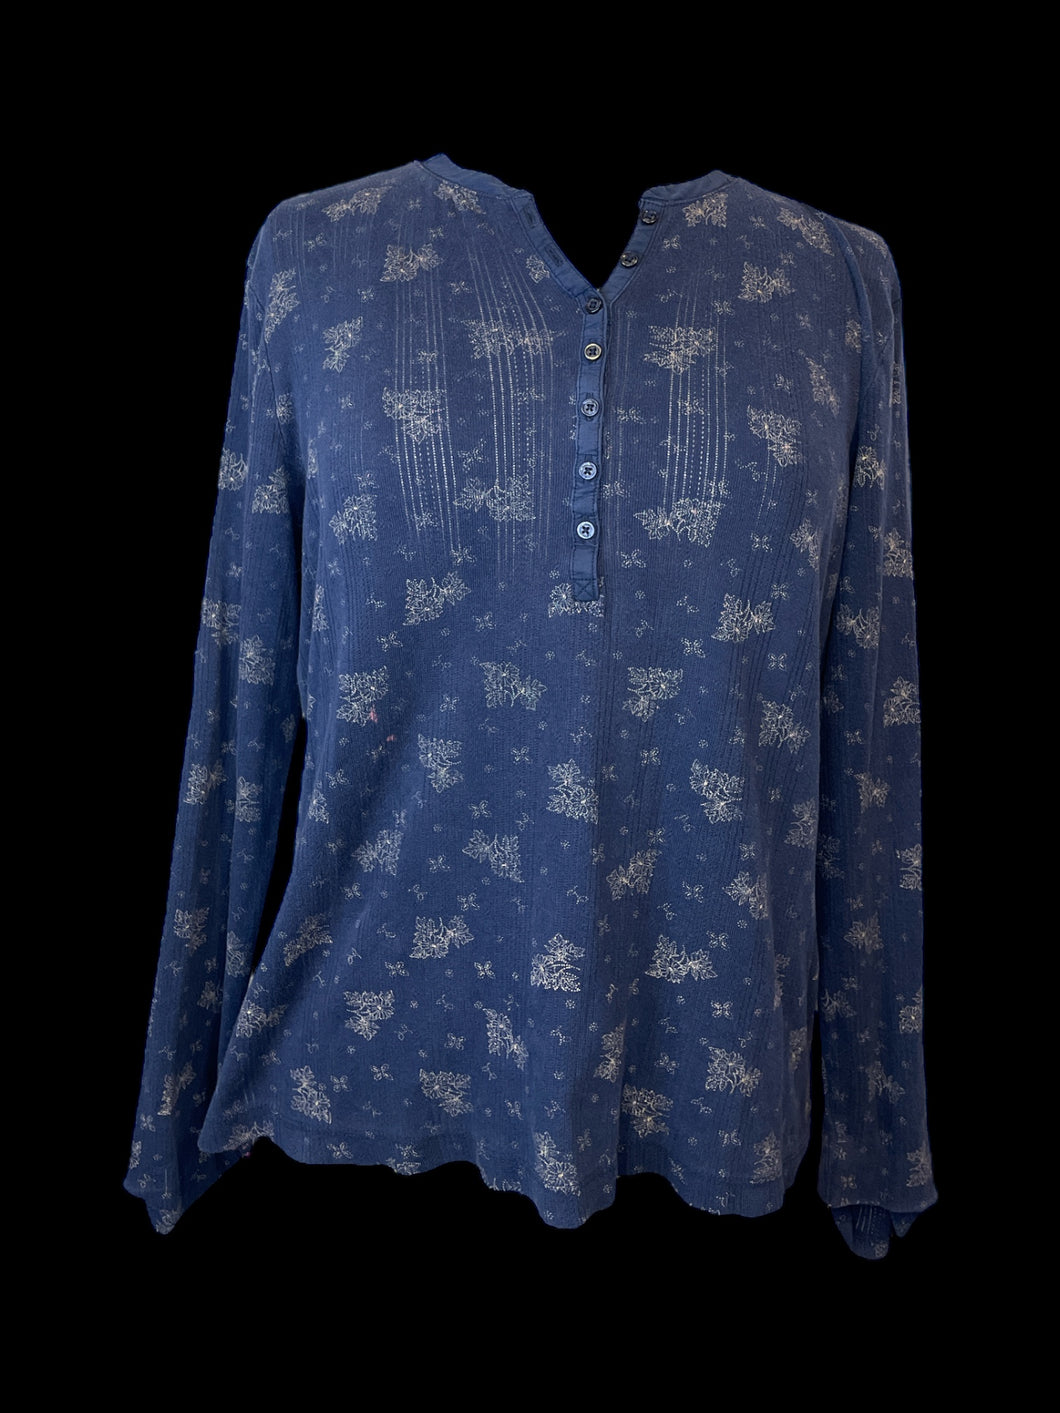 0X Dark blue & beige floral & butterfly print long sleeve cotton Henley top w/ eyelet design